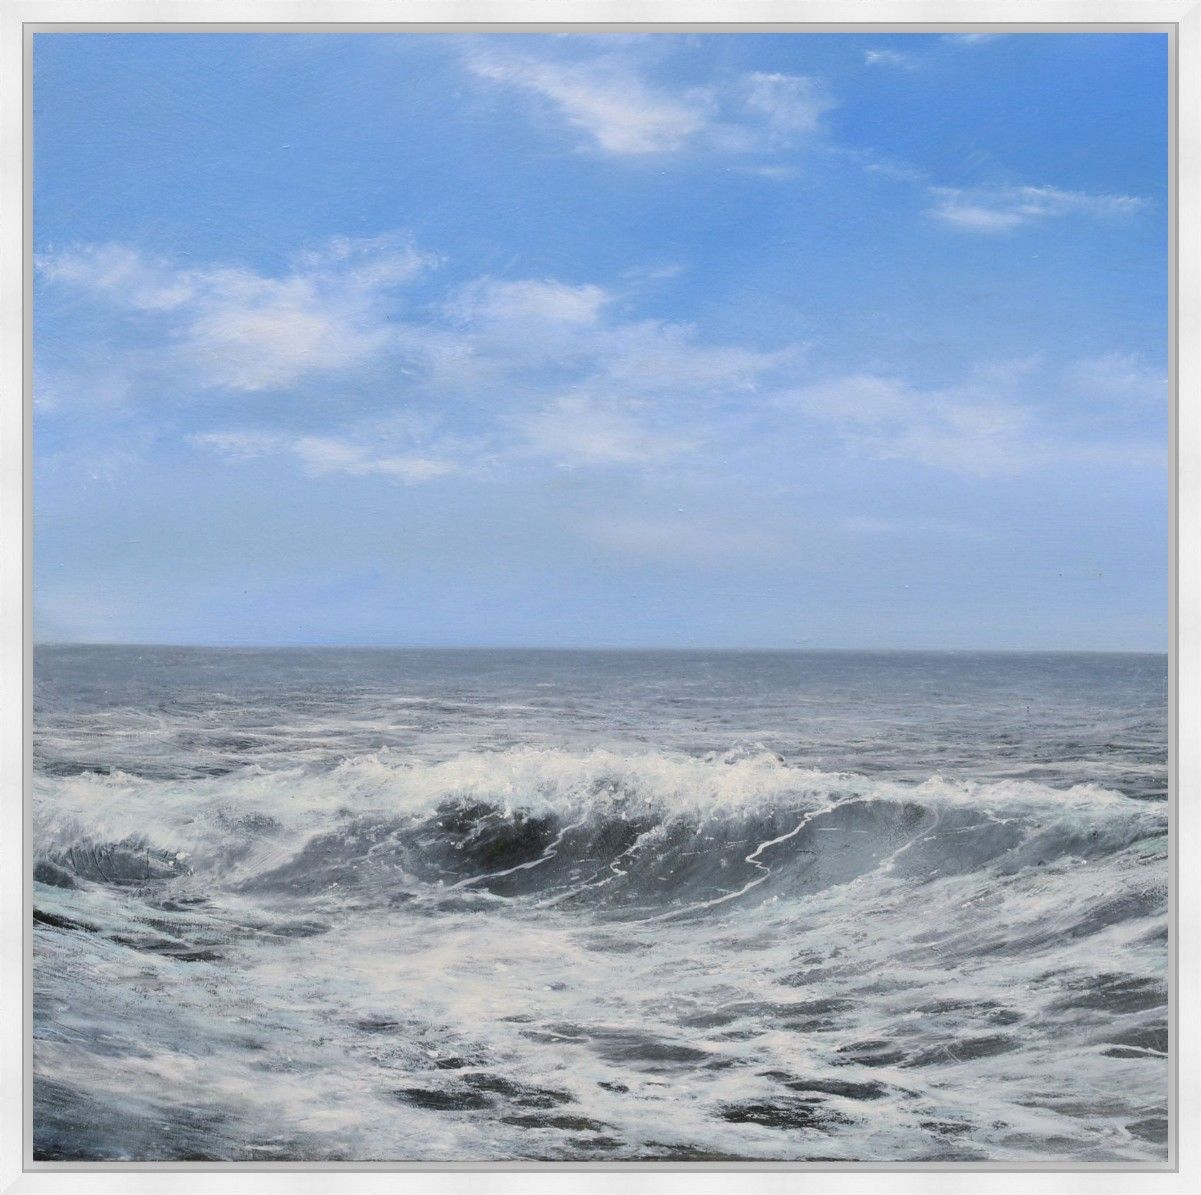 Watching Waves by Garry Pereira